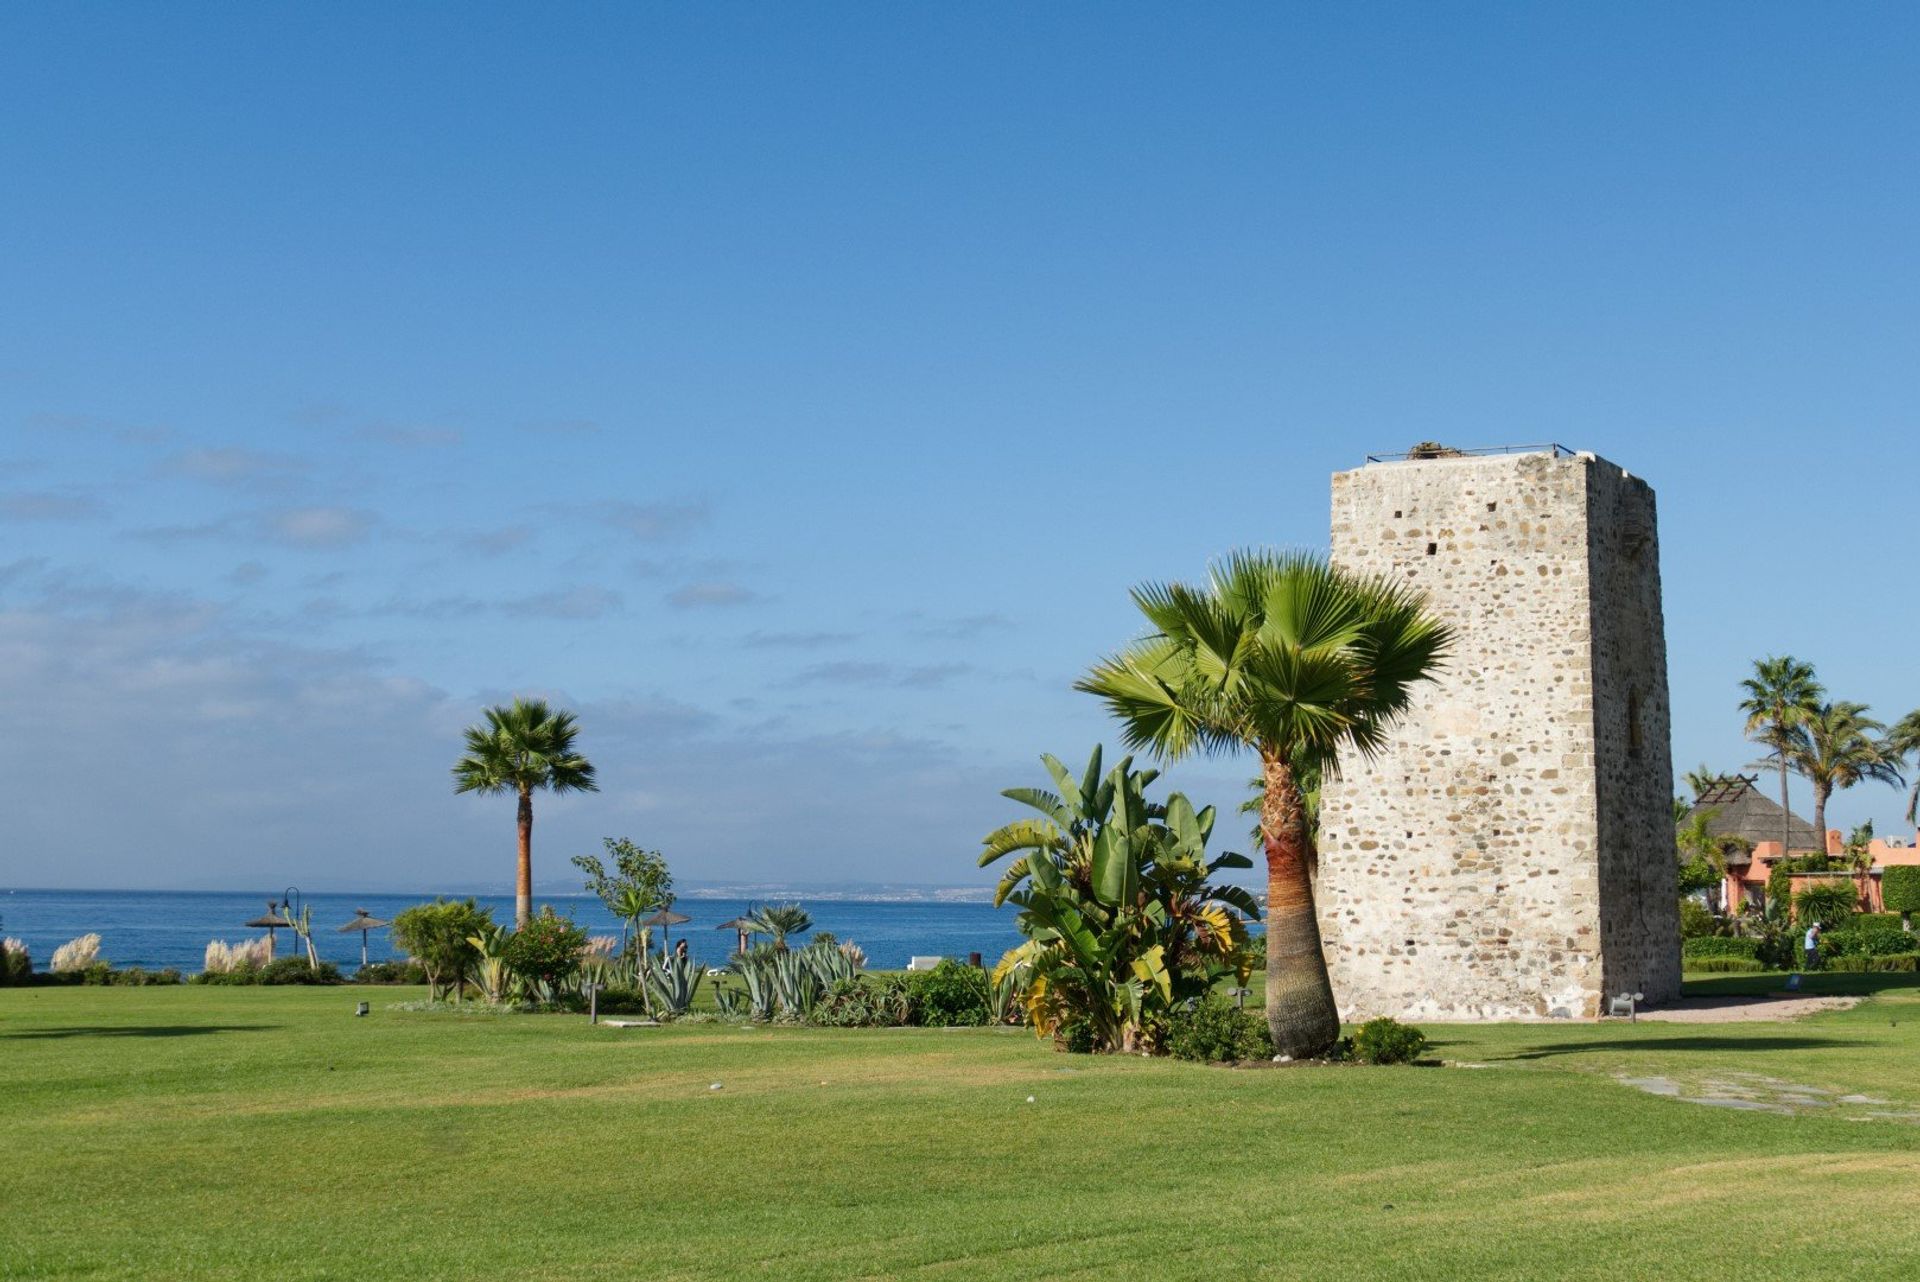 An ancient Moorish lookout tower on the beach near Guadalmansa, less than 20 minutes away